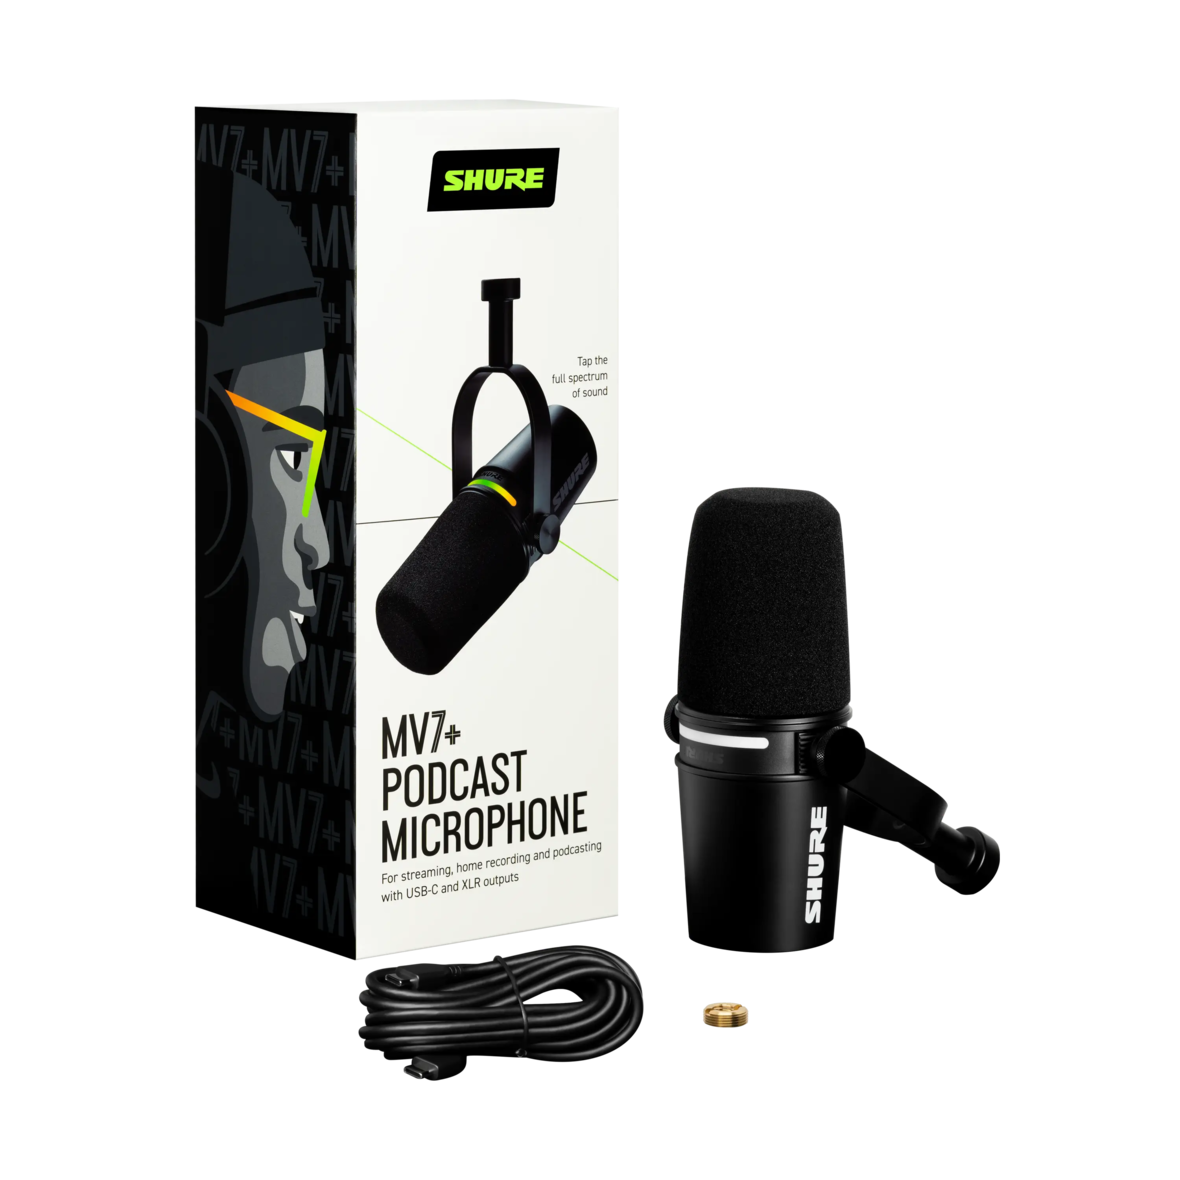 MV7+ - Podcast Microphone - Shure USA